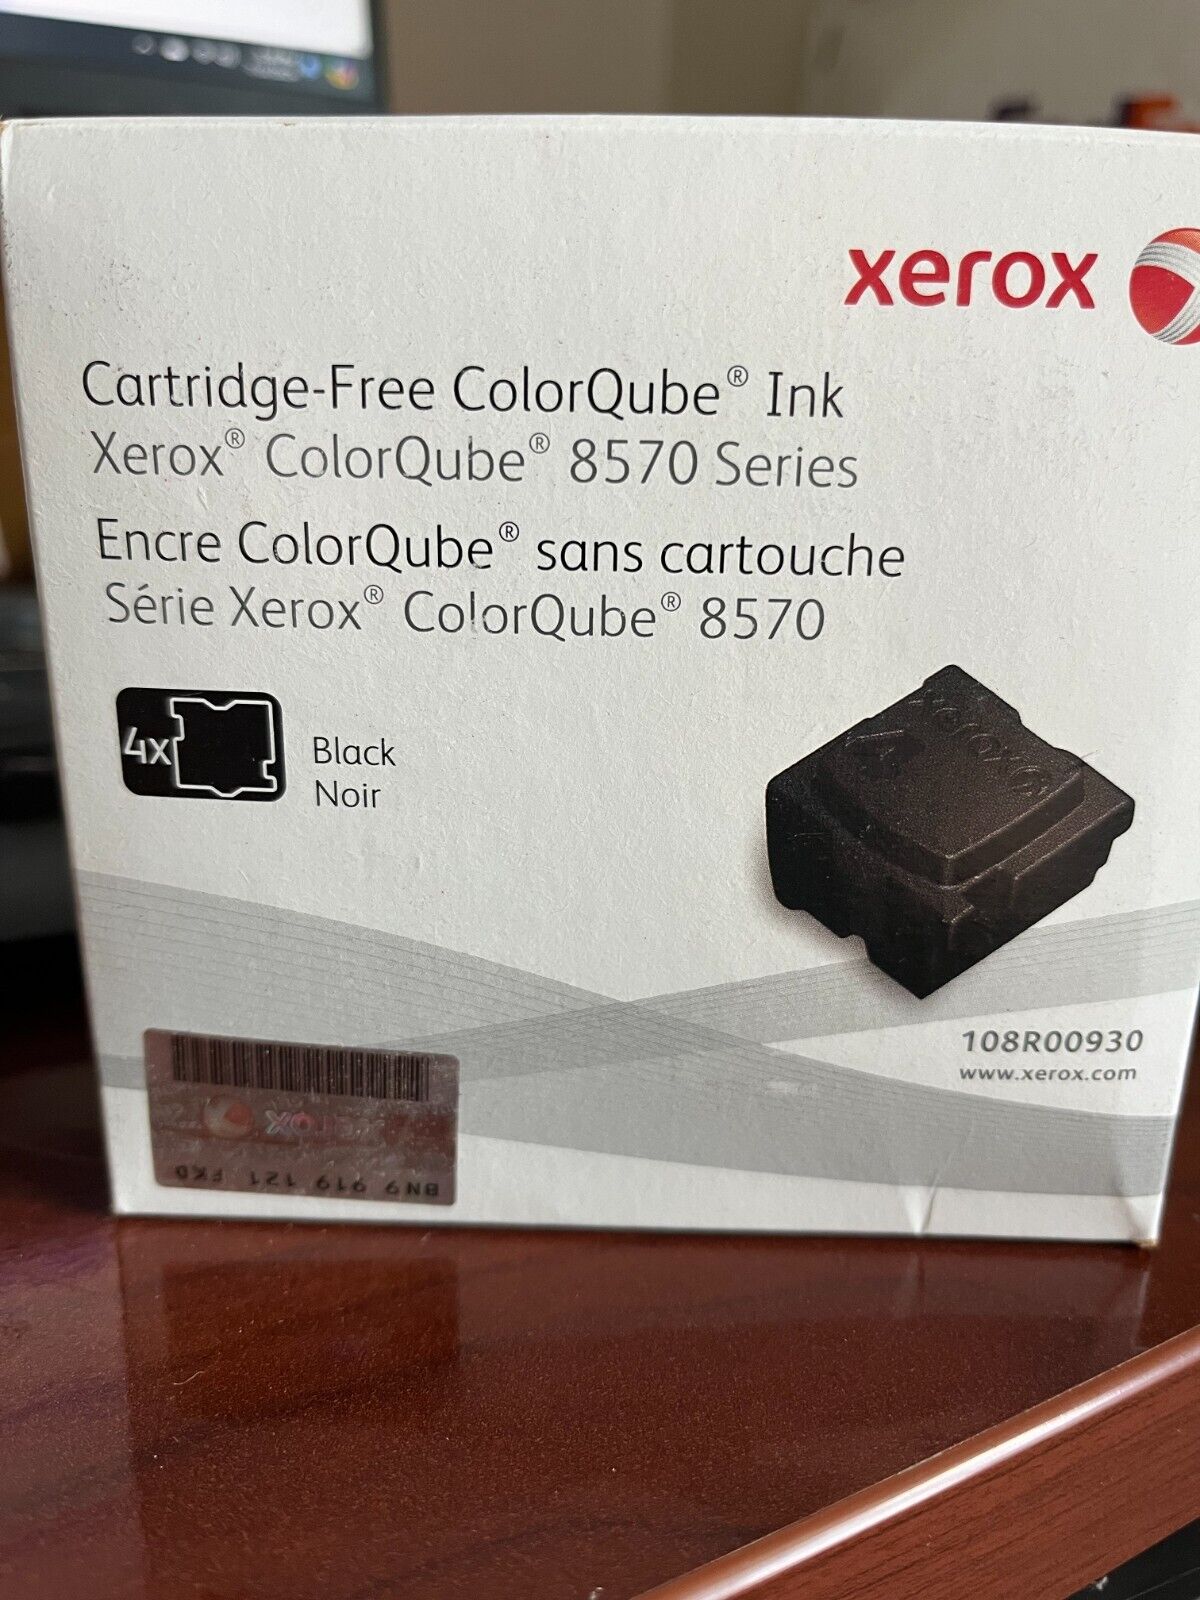 Genuine Xerox 108R00930 ColorQube Black Ink for Xerox 8570 8580 - 4 Cubes New